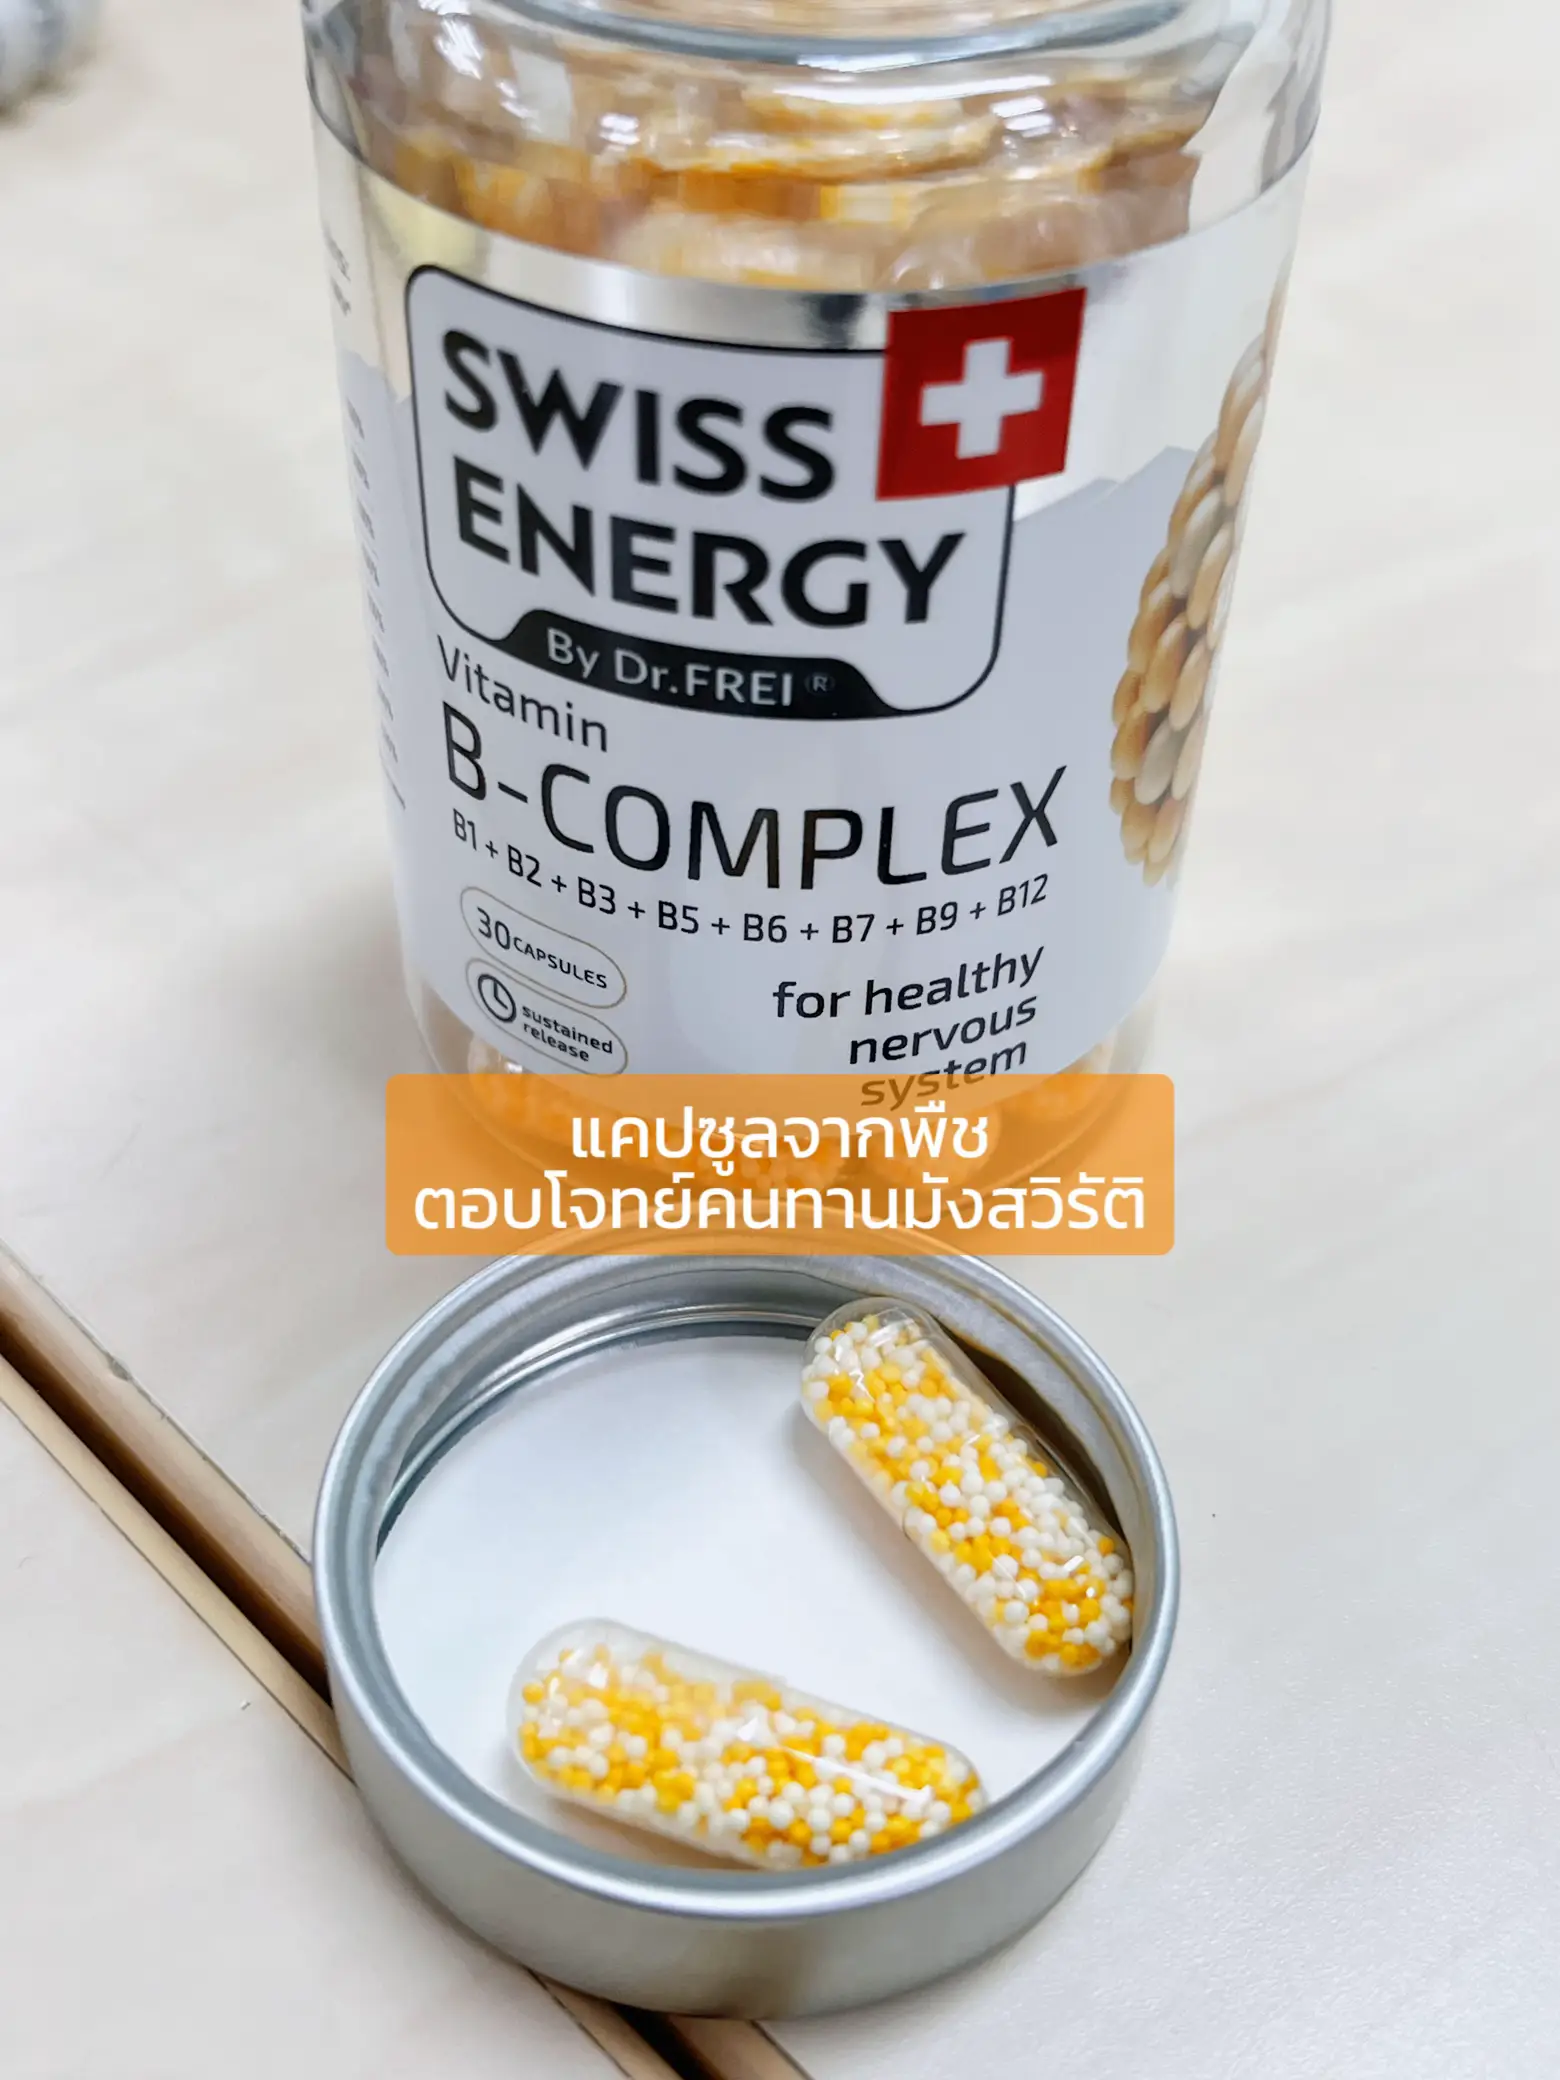 Swiss Energy Vitamins